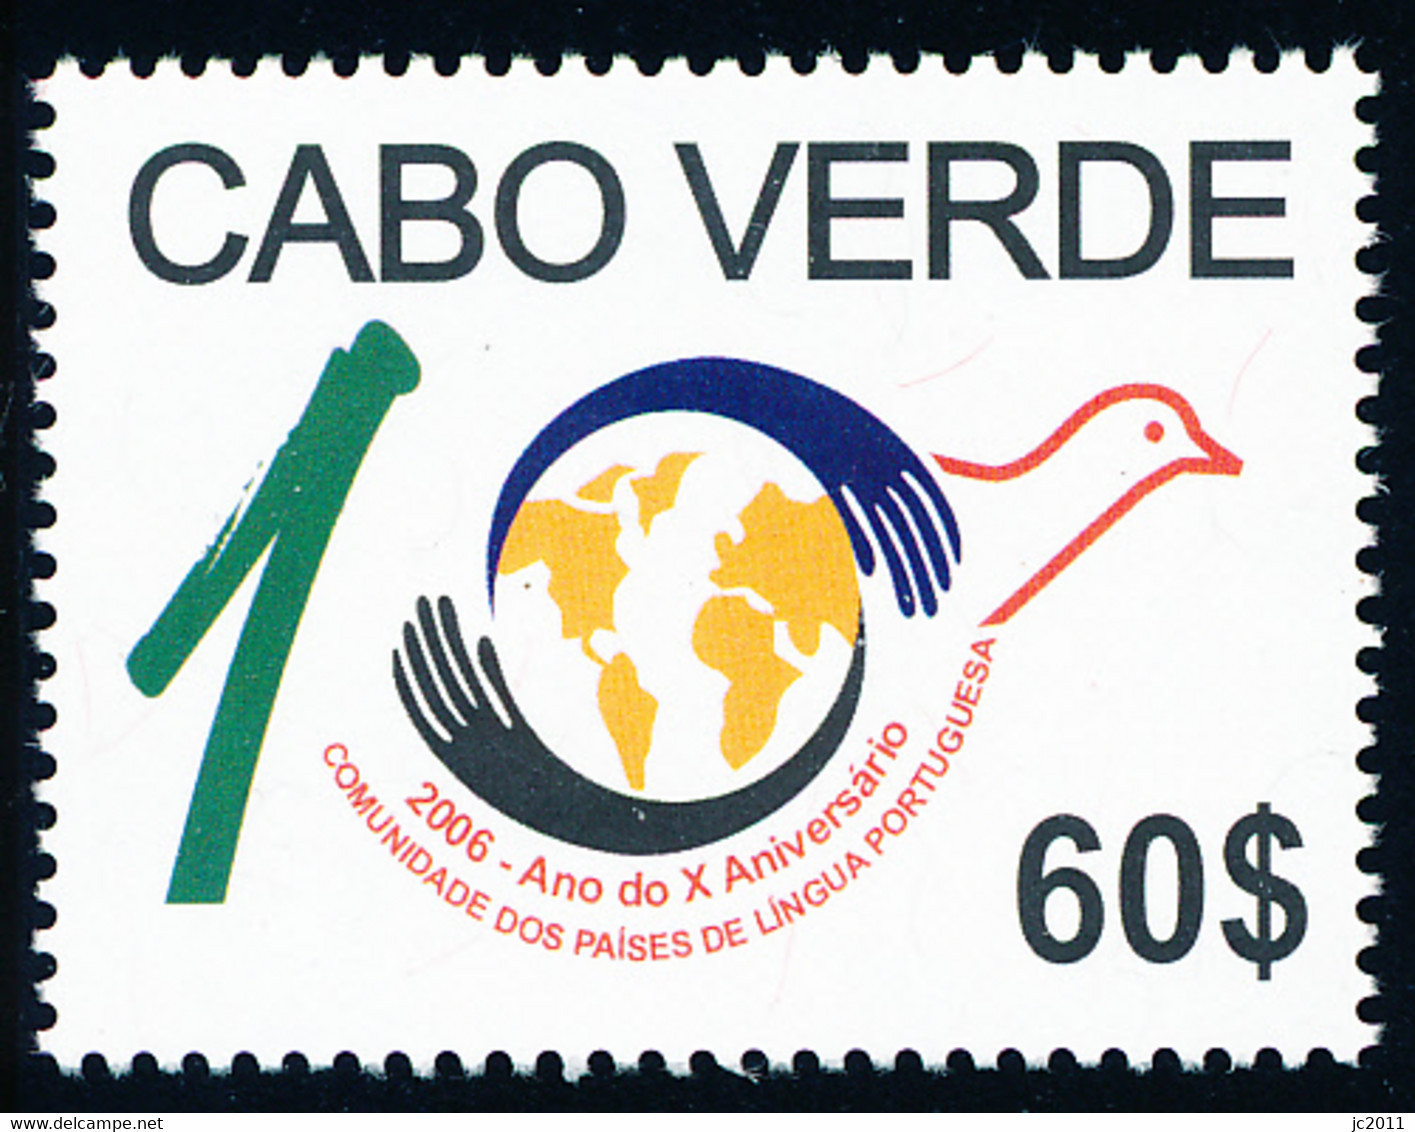 Cabo Verde - 2006 - CPLP - Community Of Countries Of Portuguese Language - Cape Verde